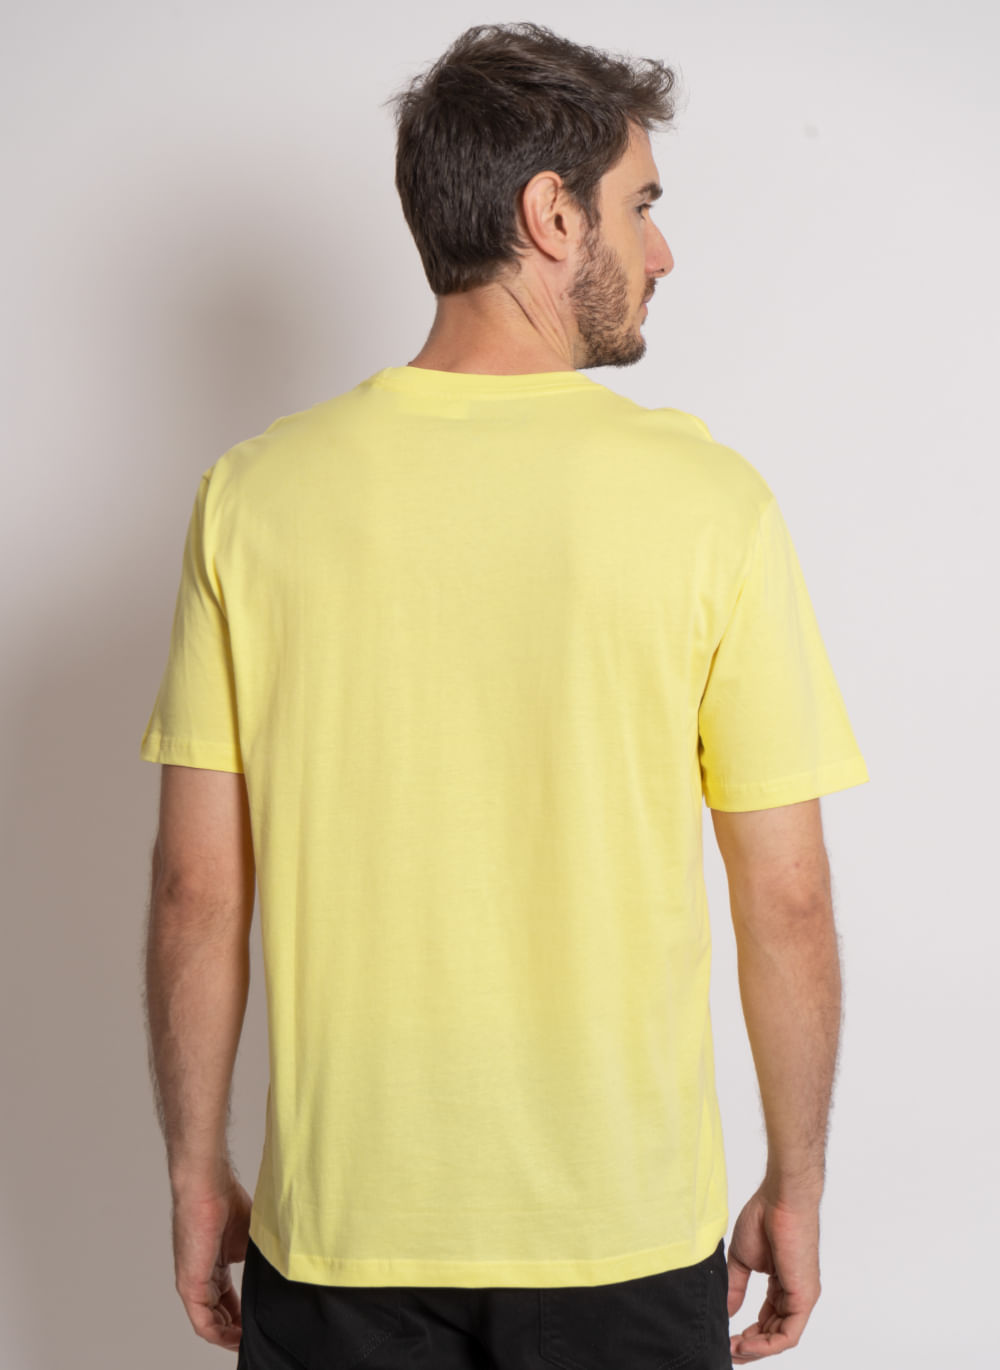 Camiseta-Amarelo-Lisa-Aleatory-Amarelo-P